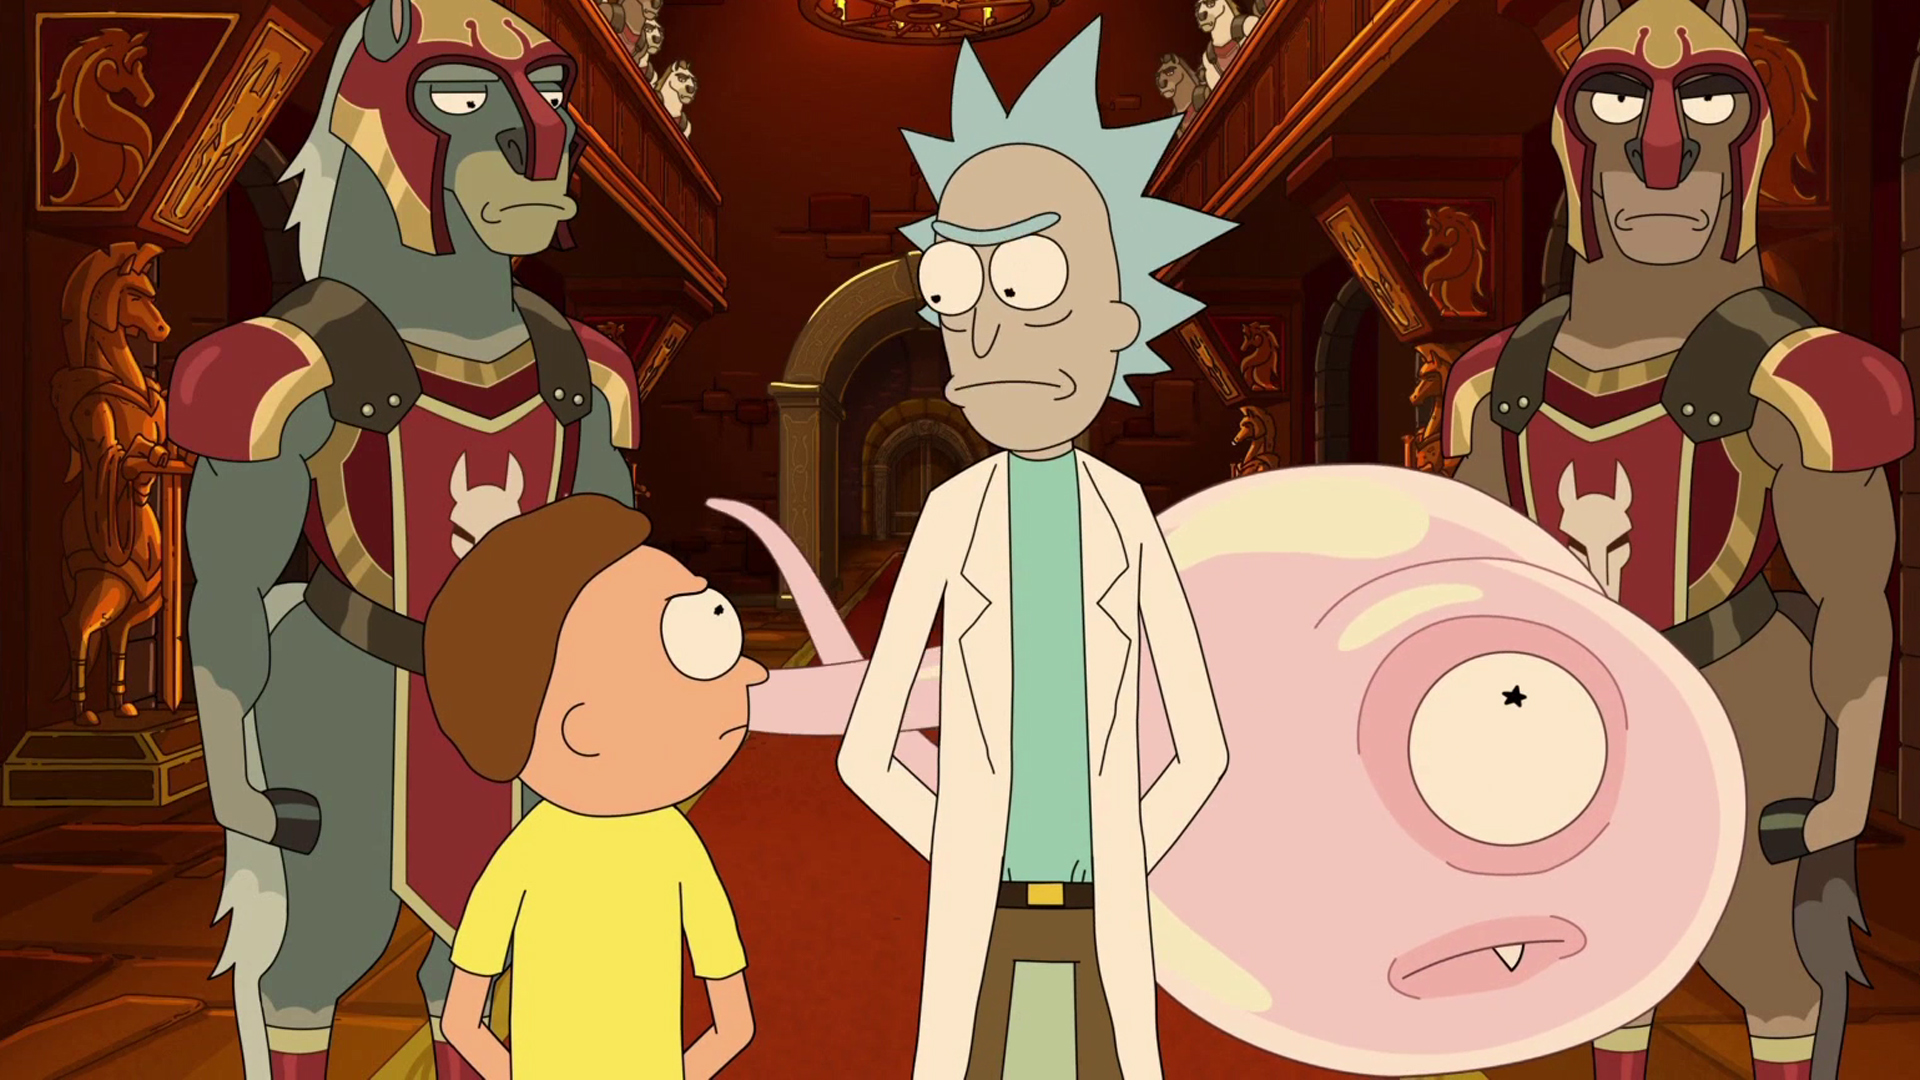 Rick and Morty Season 5 Episode 4